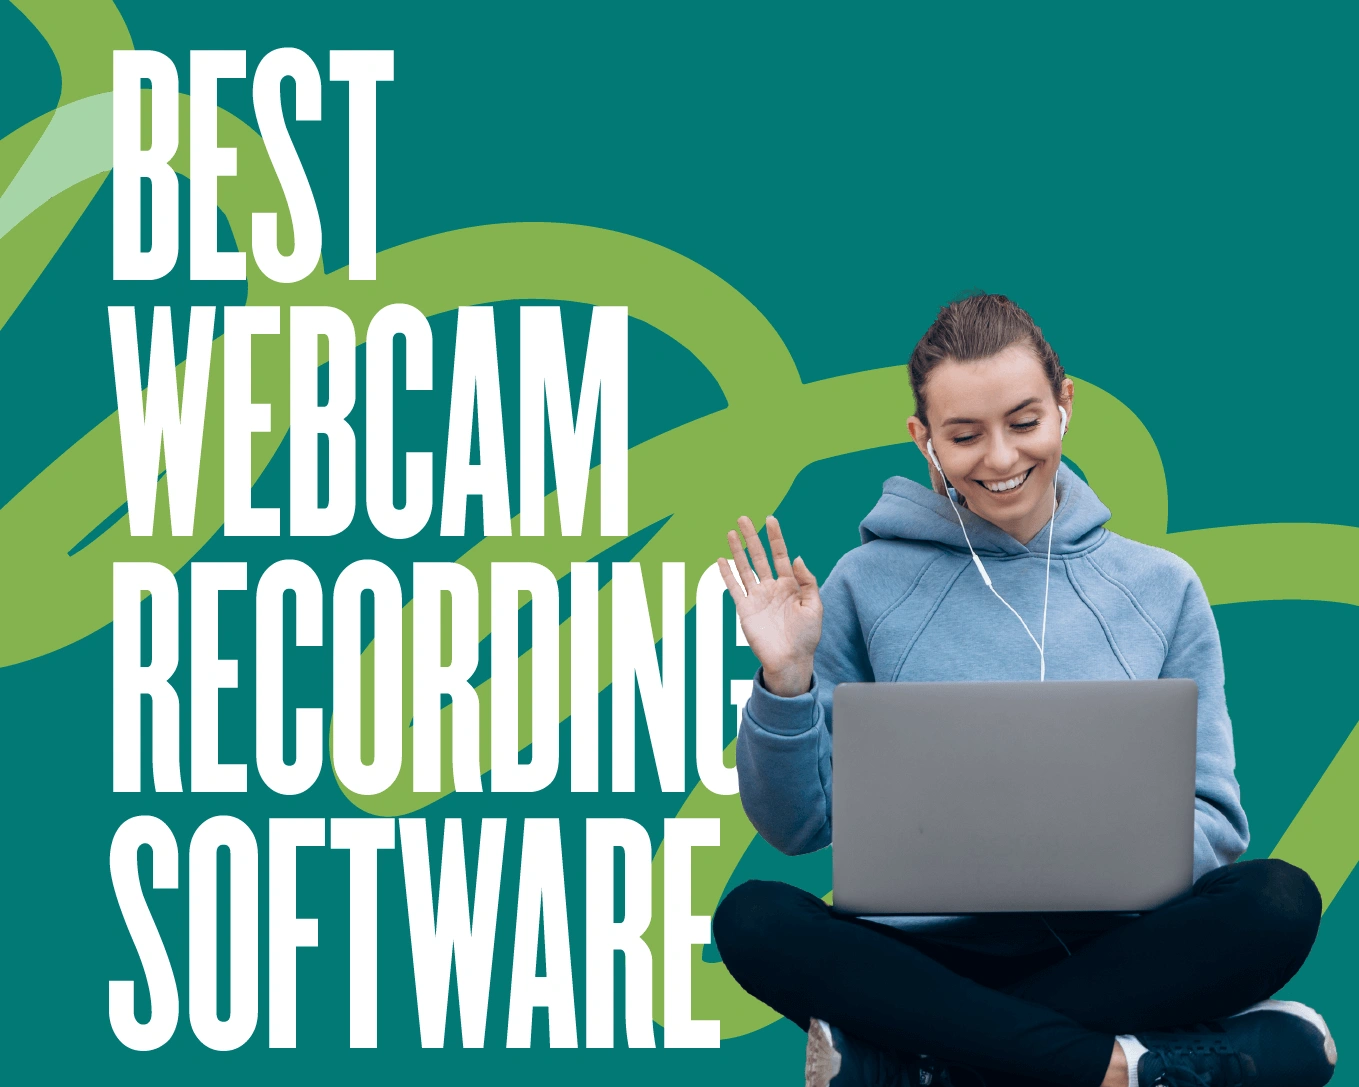 Free Amature Webcam Girls - Best Webcam Recording Software for Podcasters